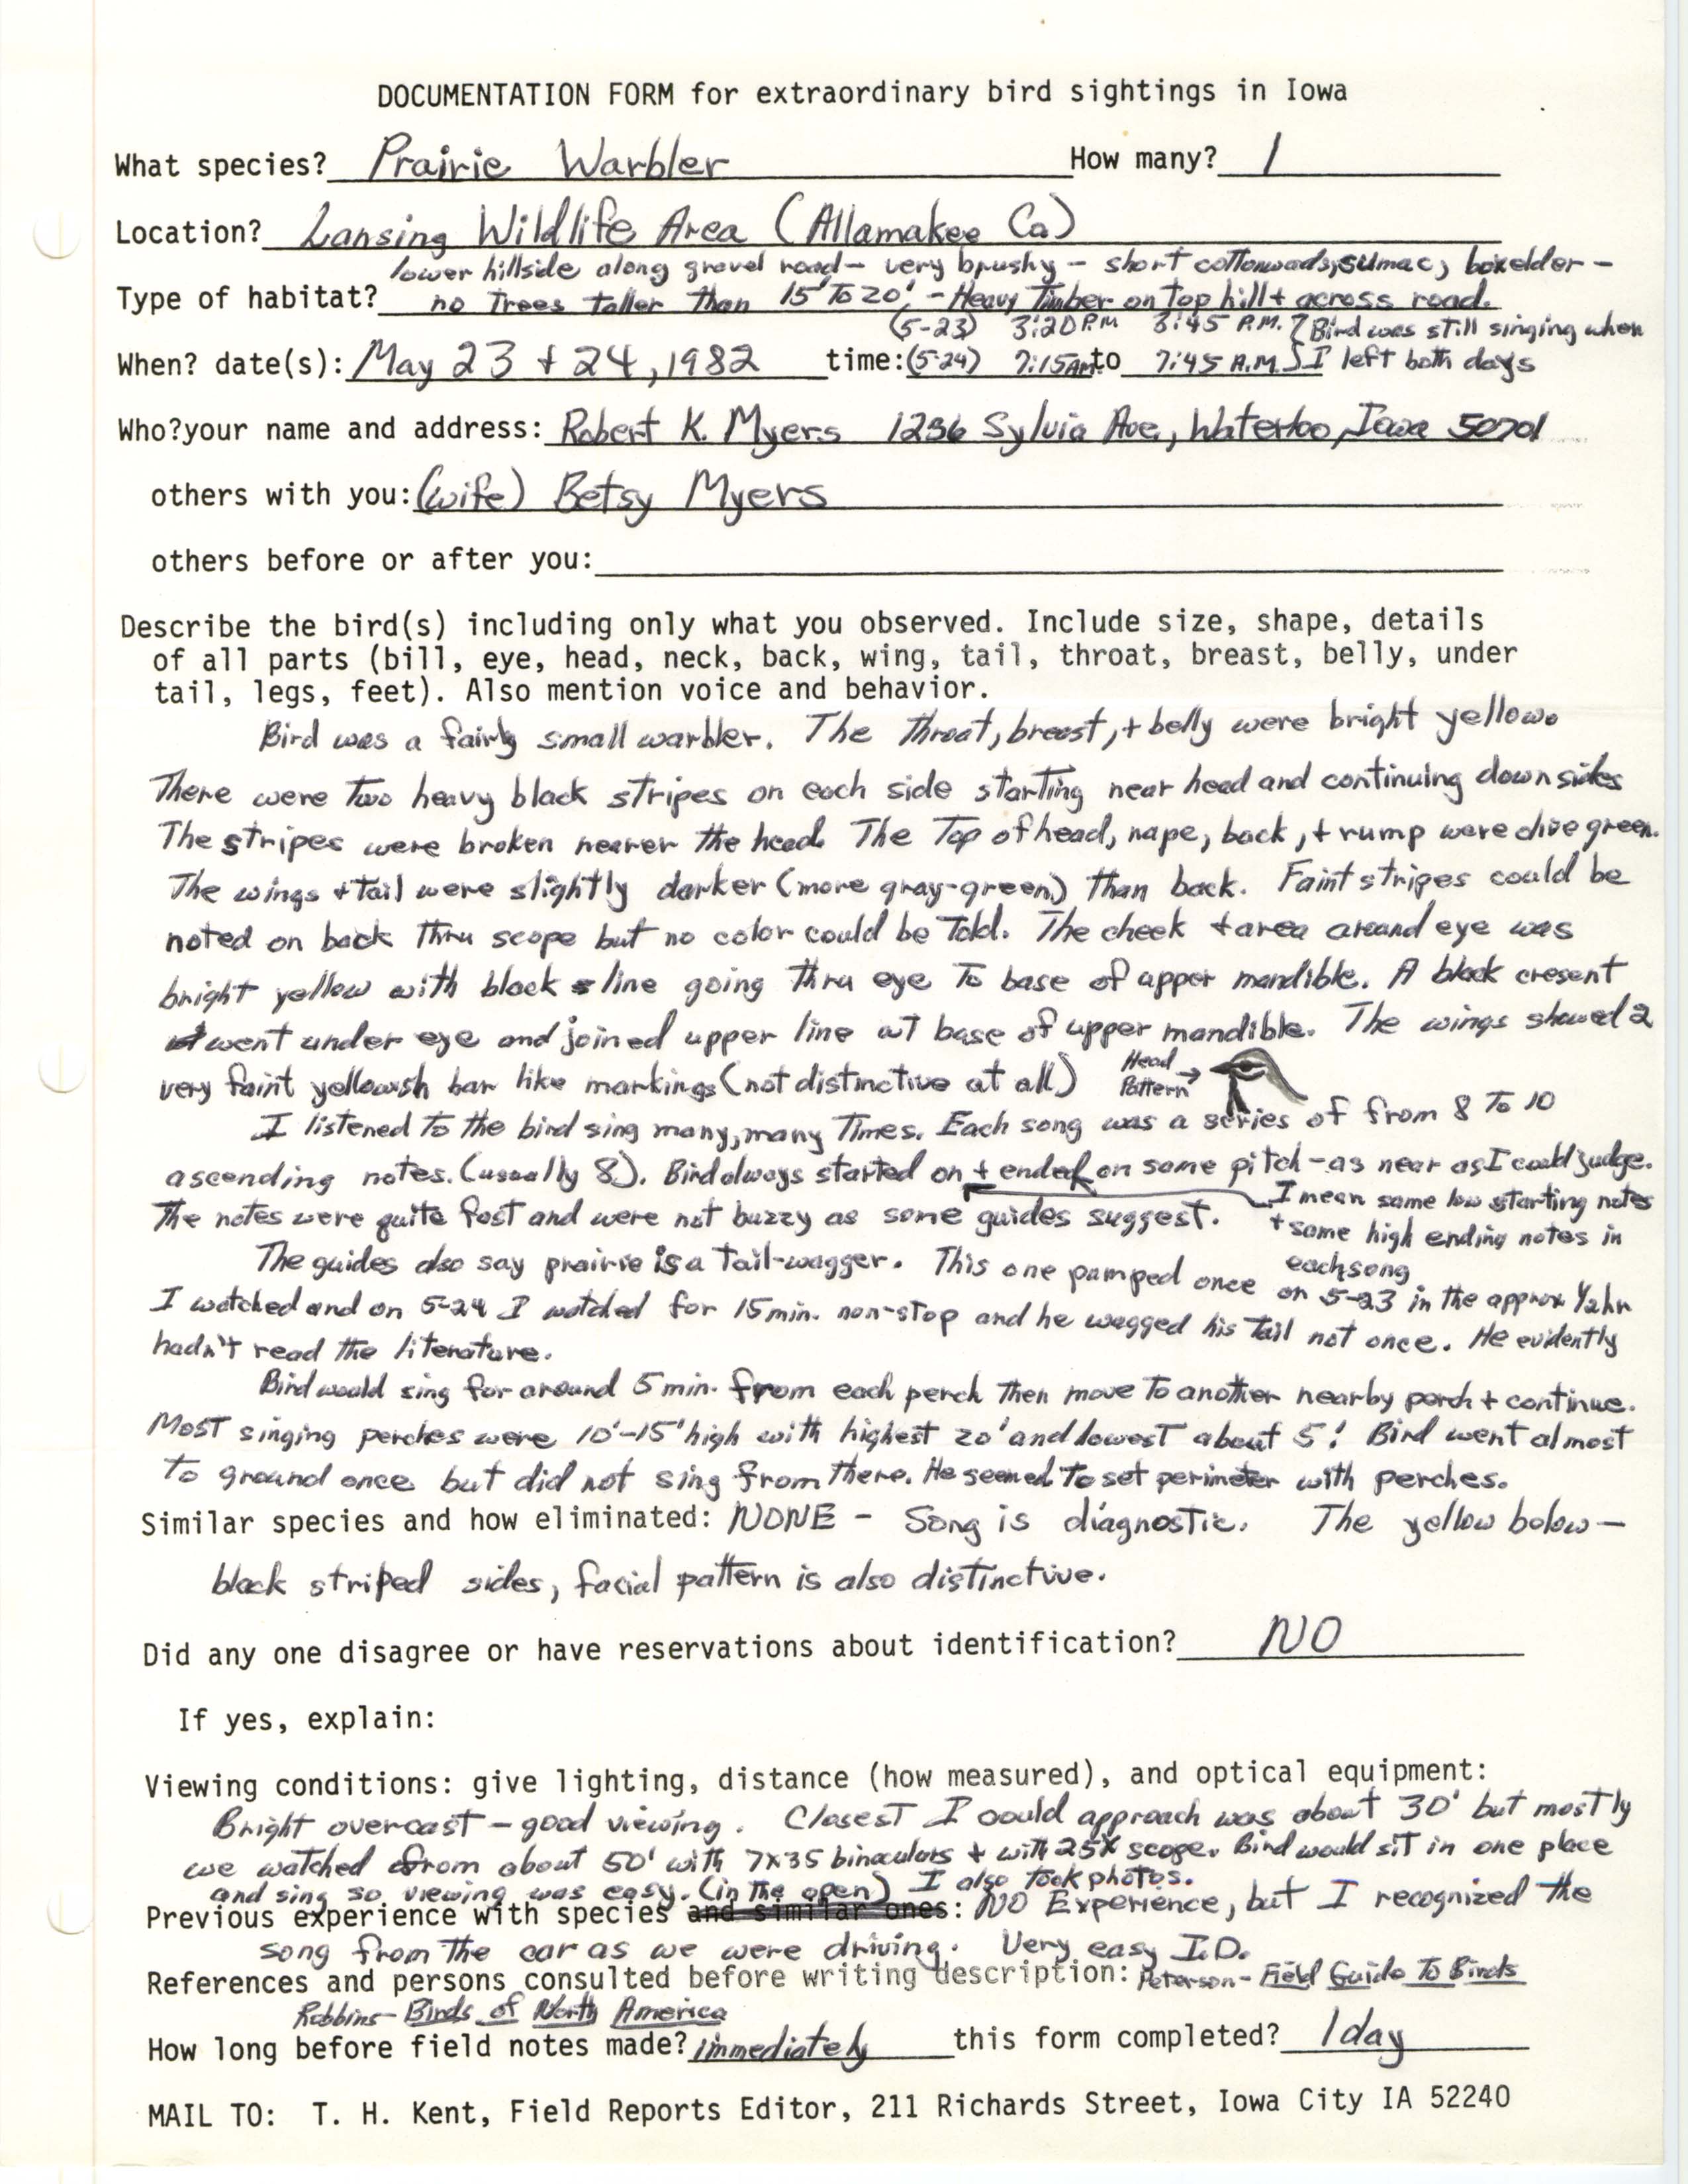 Rare bird documentation form for Prairie Warbler at Lansing Wildlife Area in 1982